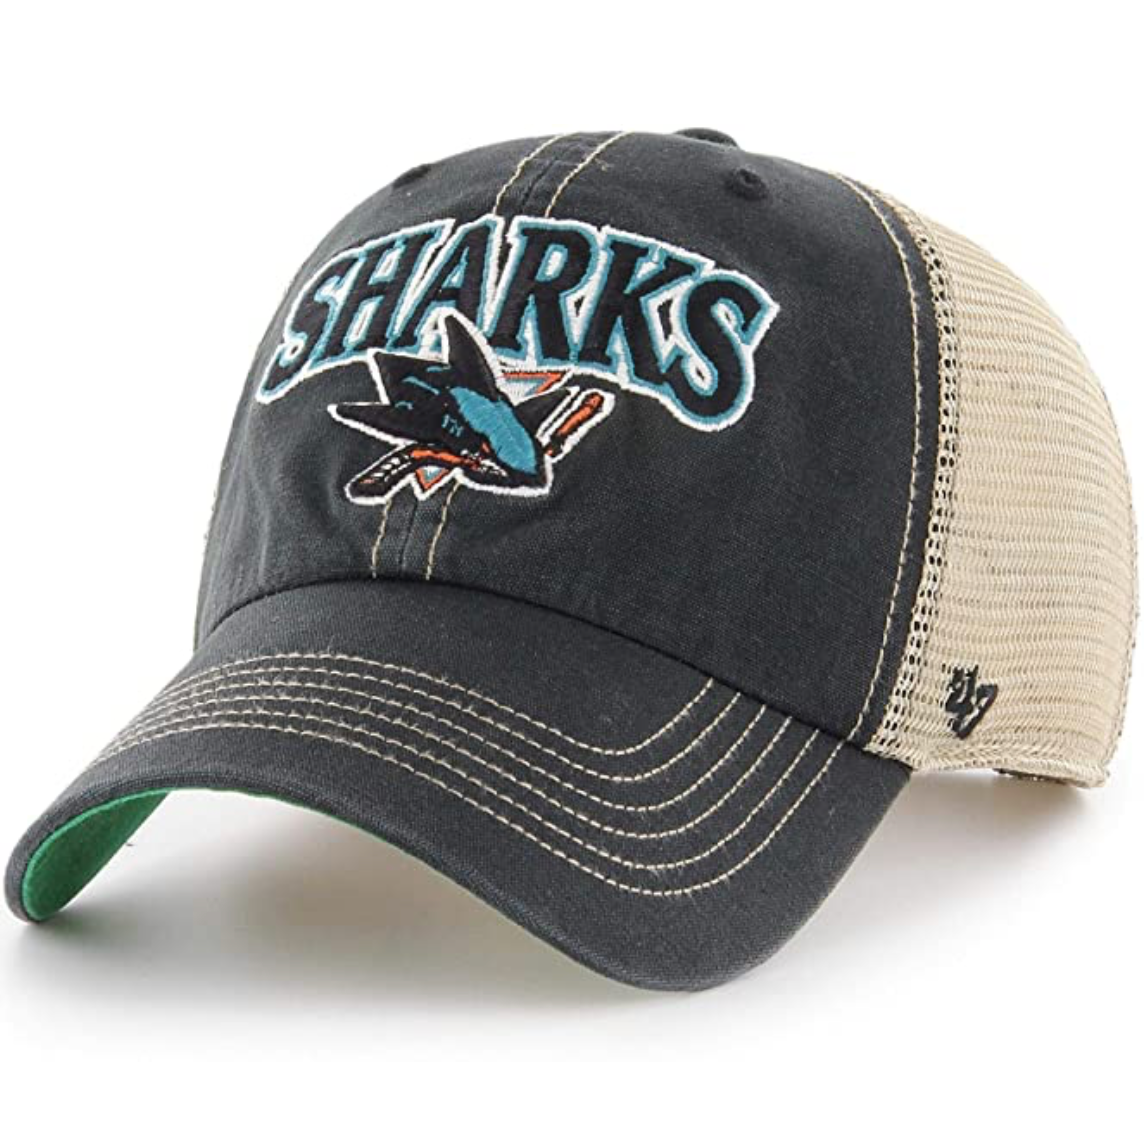 '47 Brand - San Jose Sharks Trucker Cap - Black